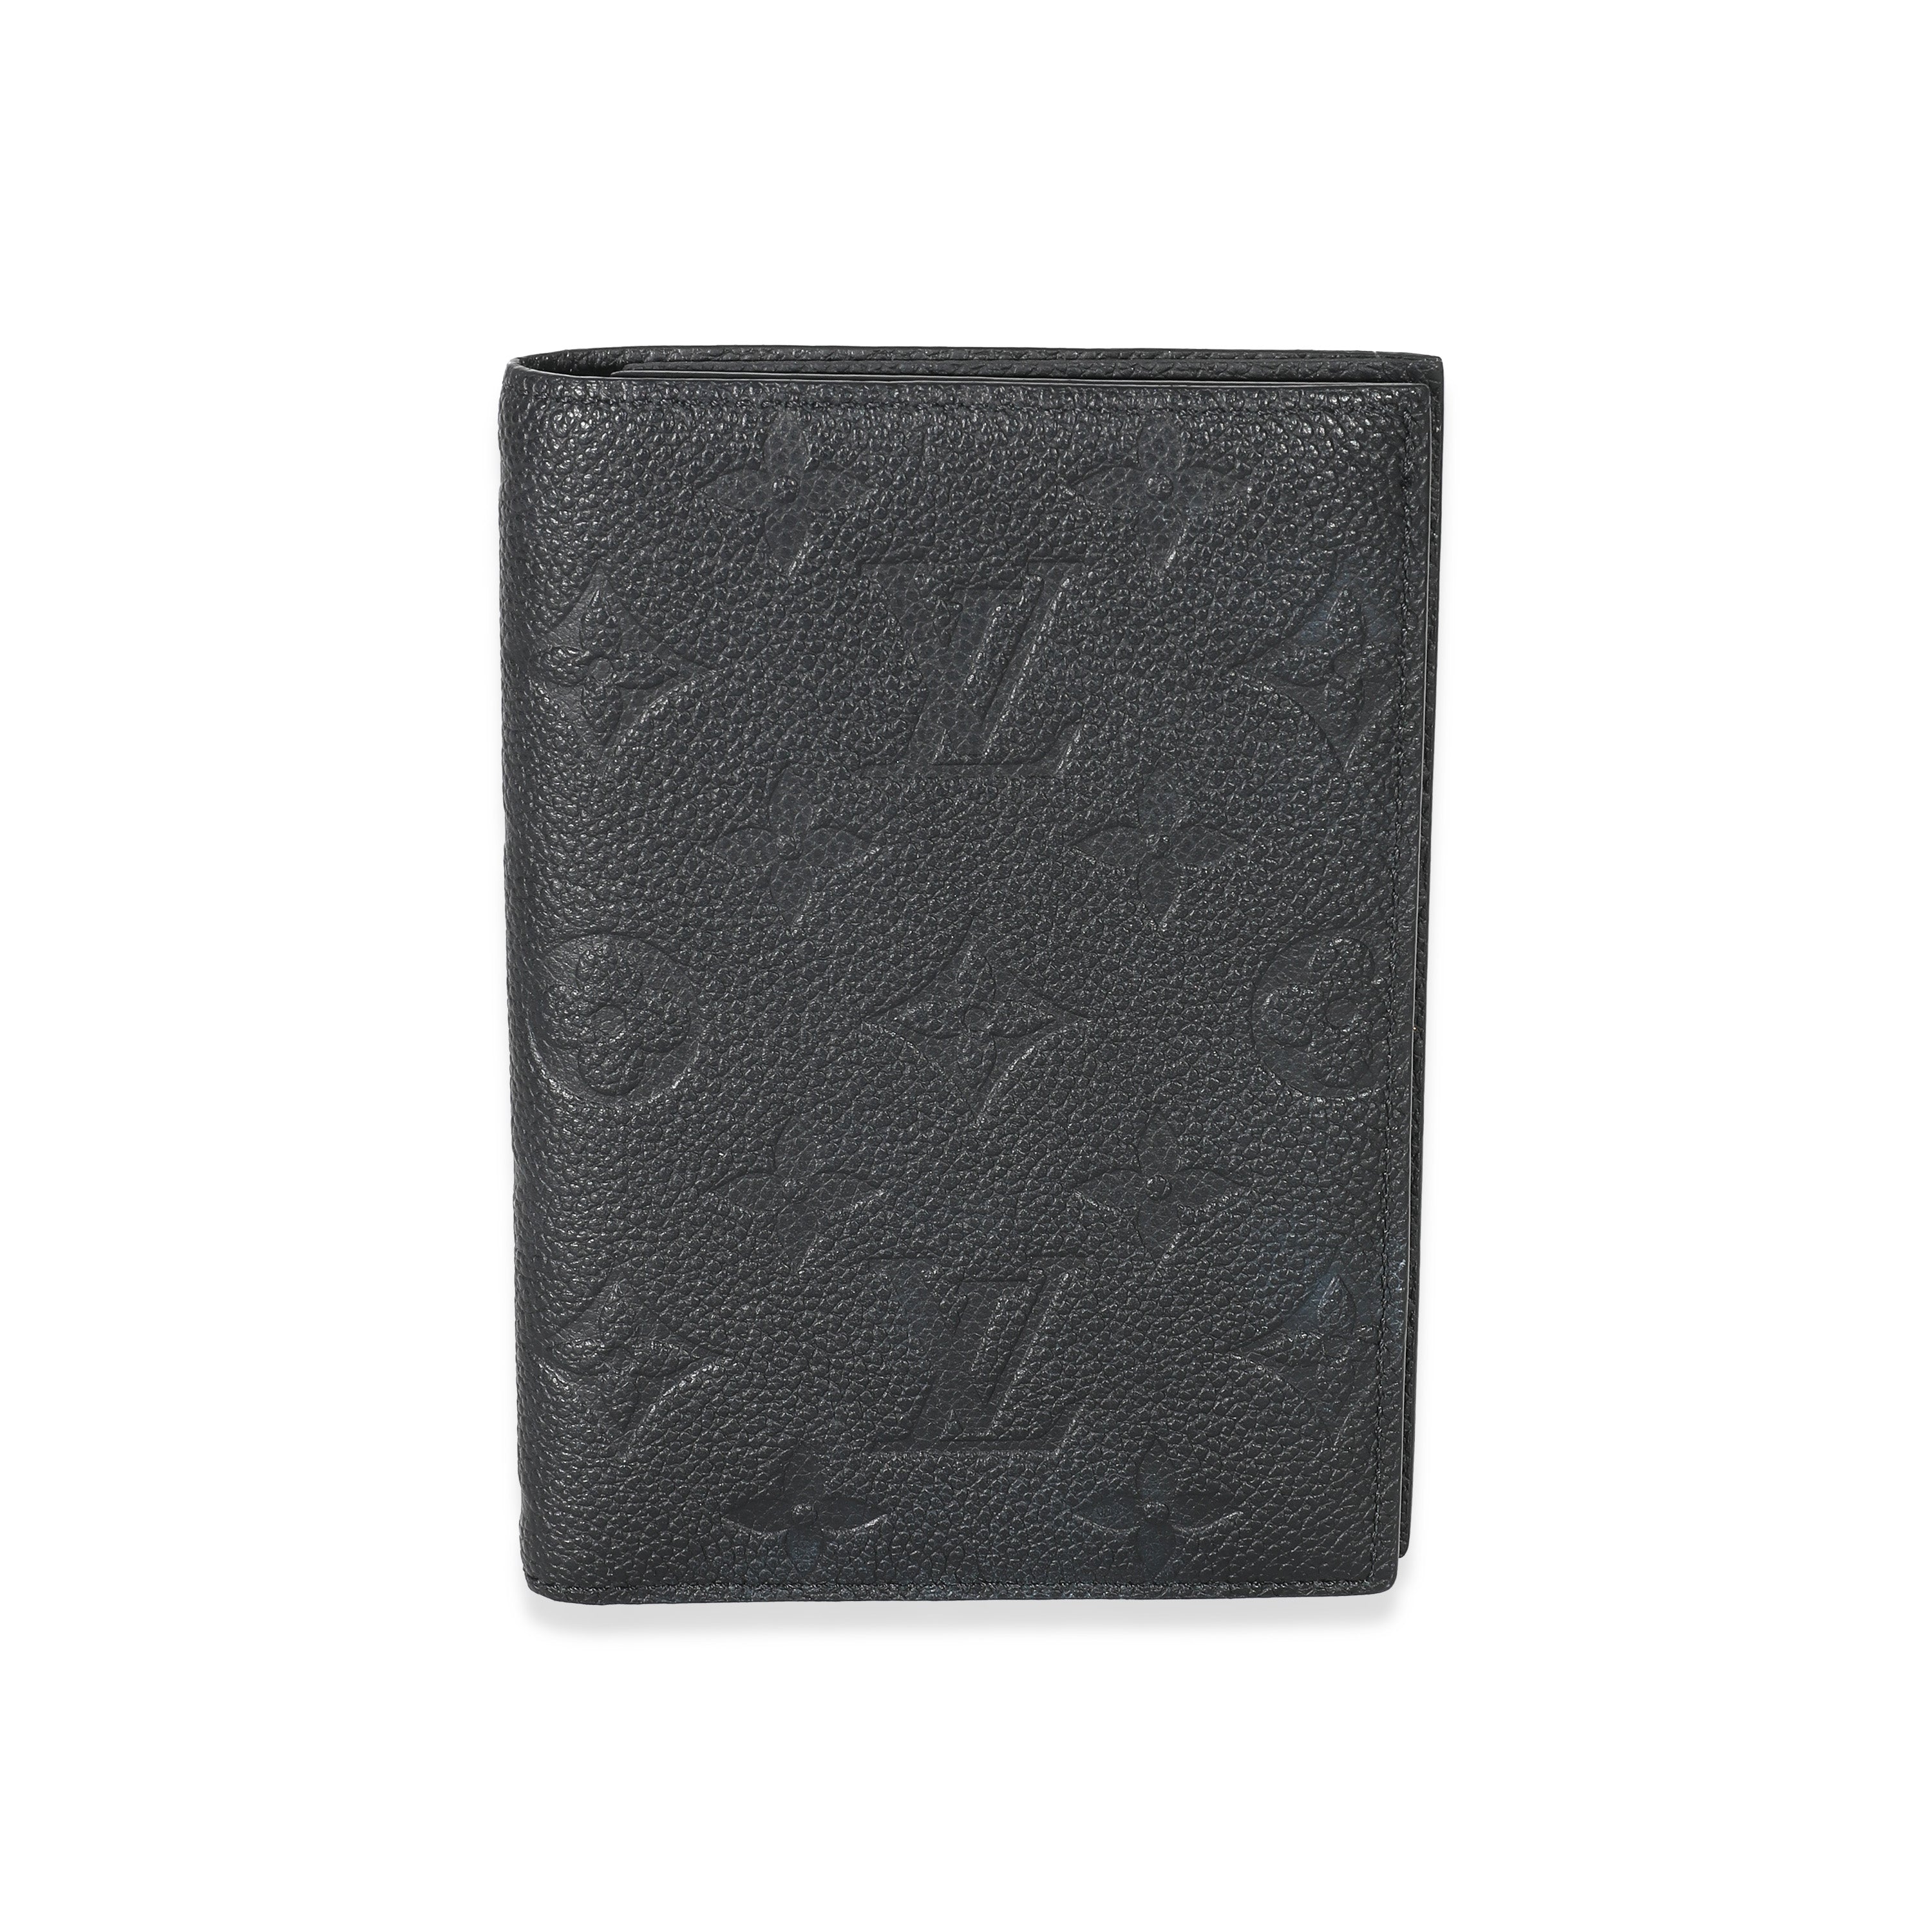 LOUIS VUITTON Monogram Empreinte Black Leather Passport Cover NEW